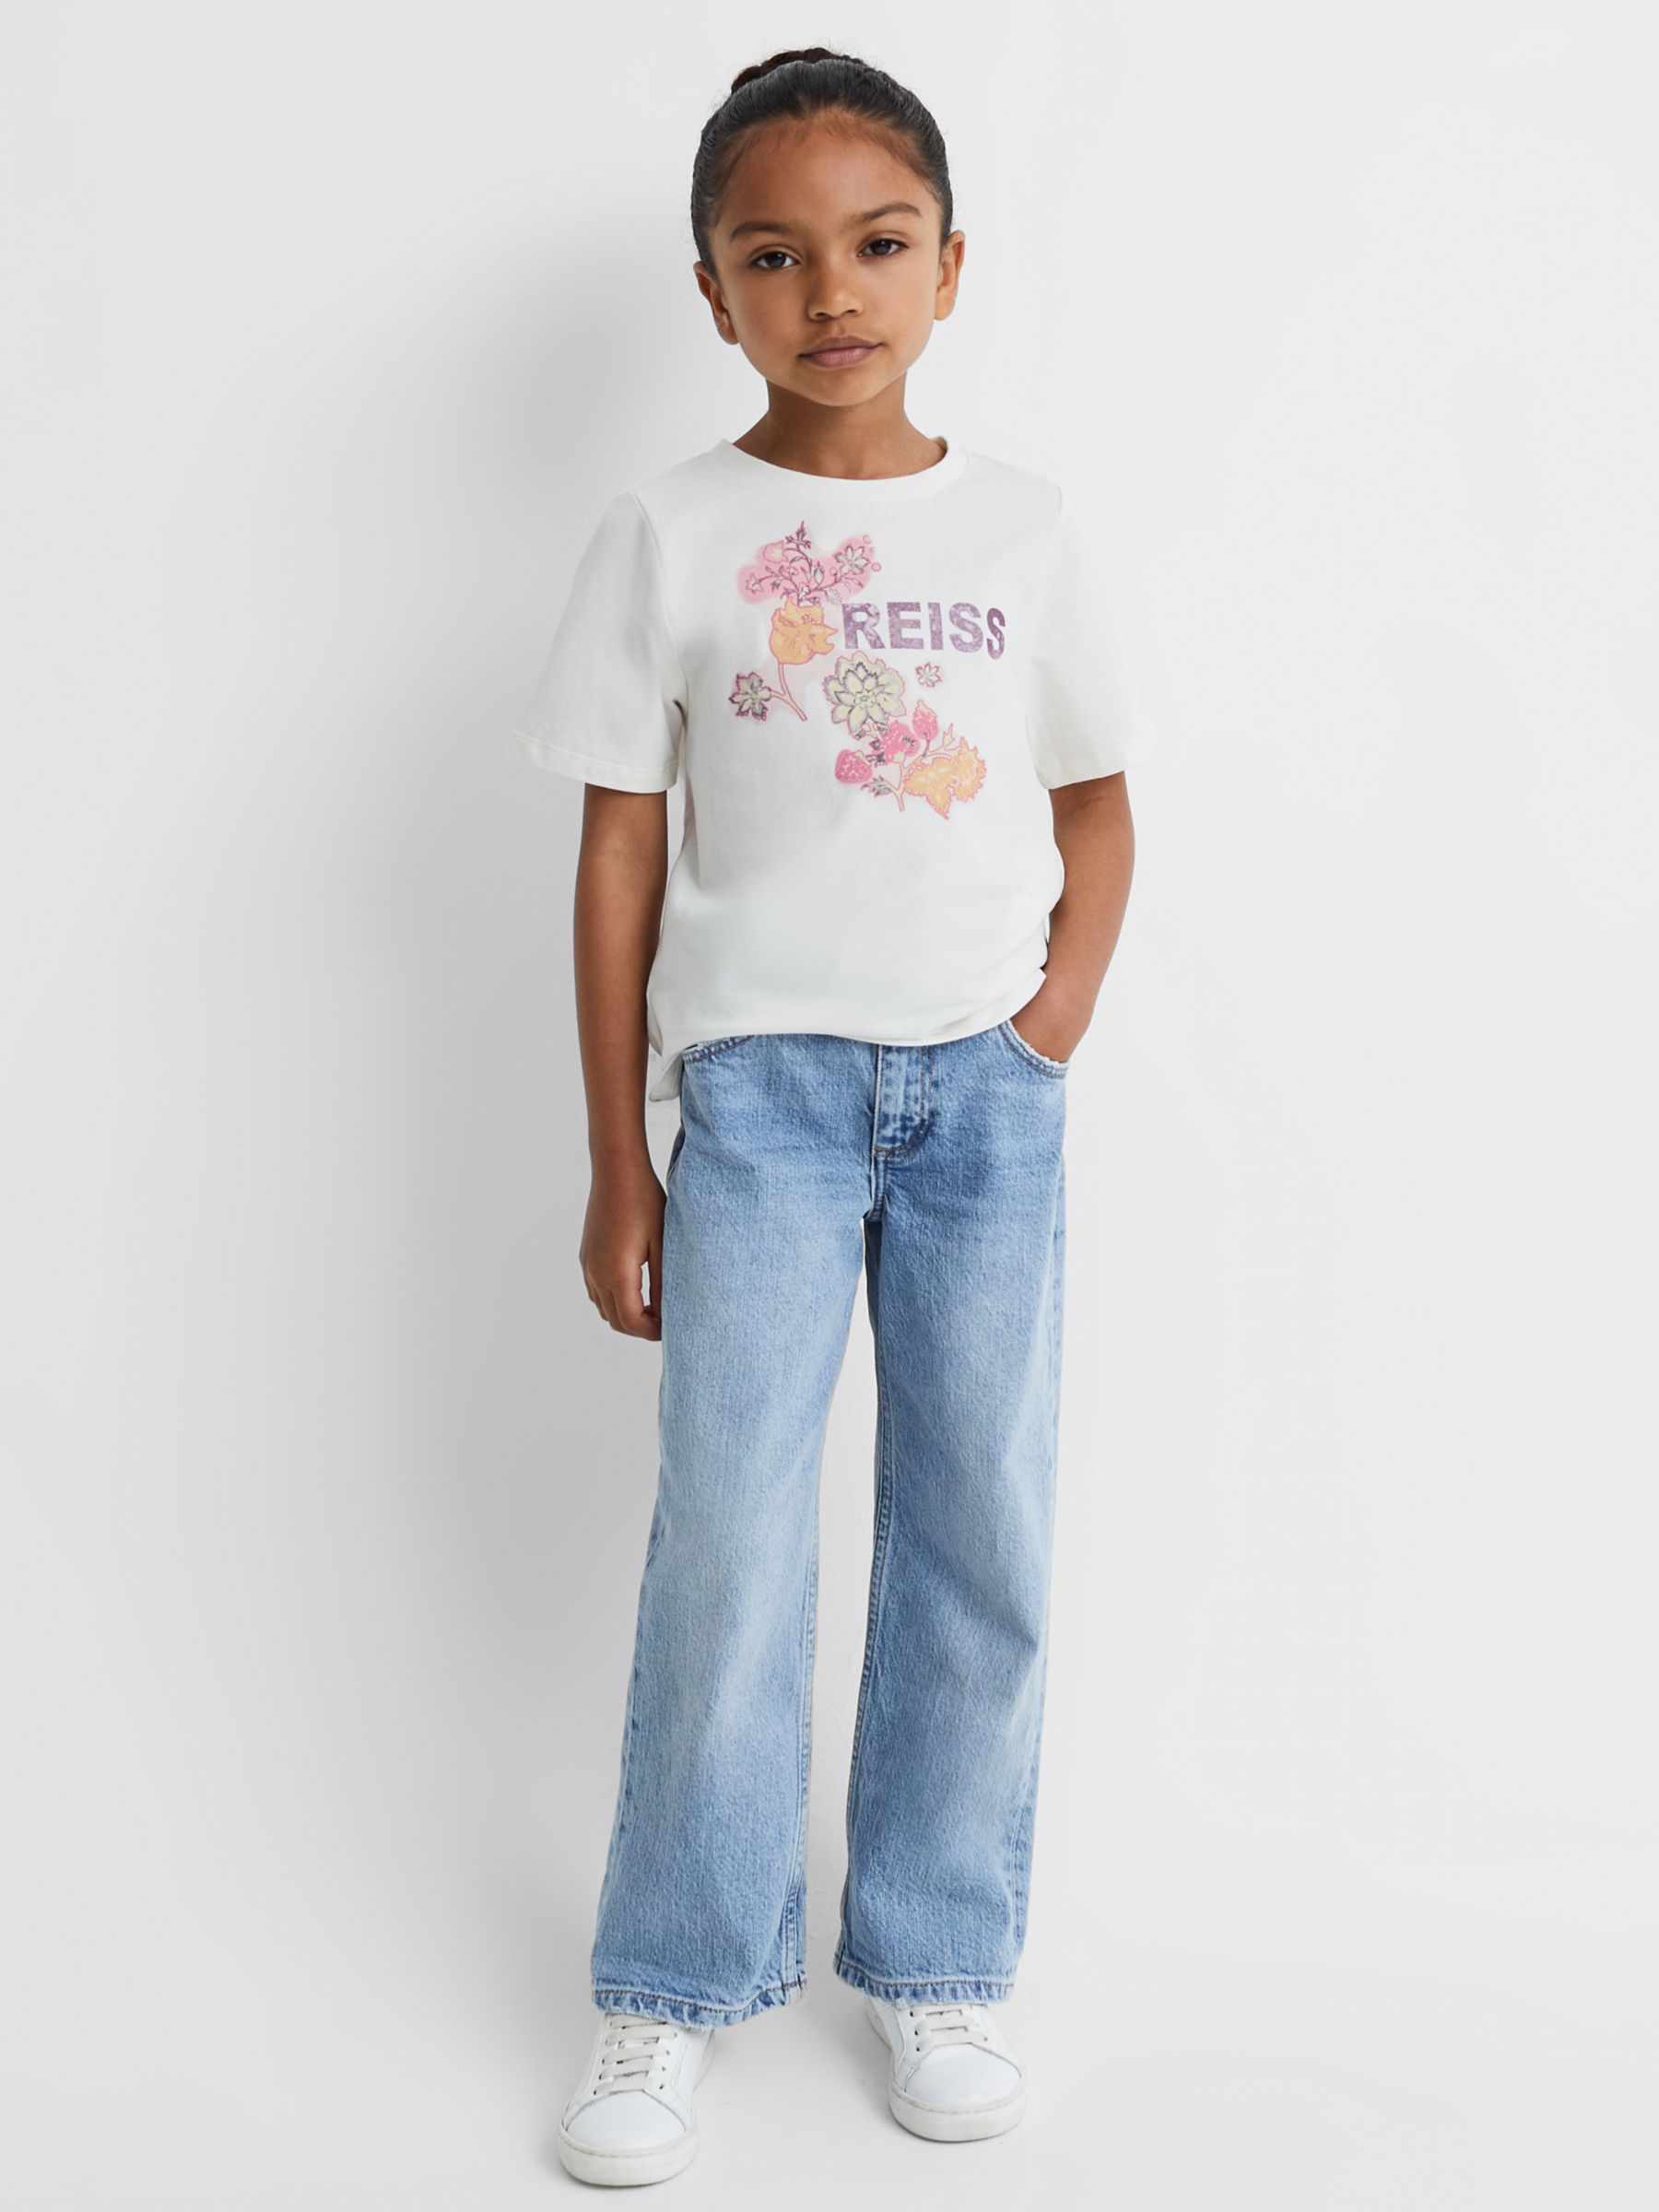 Reiss Kids' Misha Logo Floral Motif Crew Neck T-Shirt, Ivory, 10-11 years